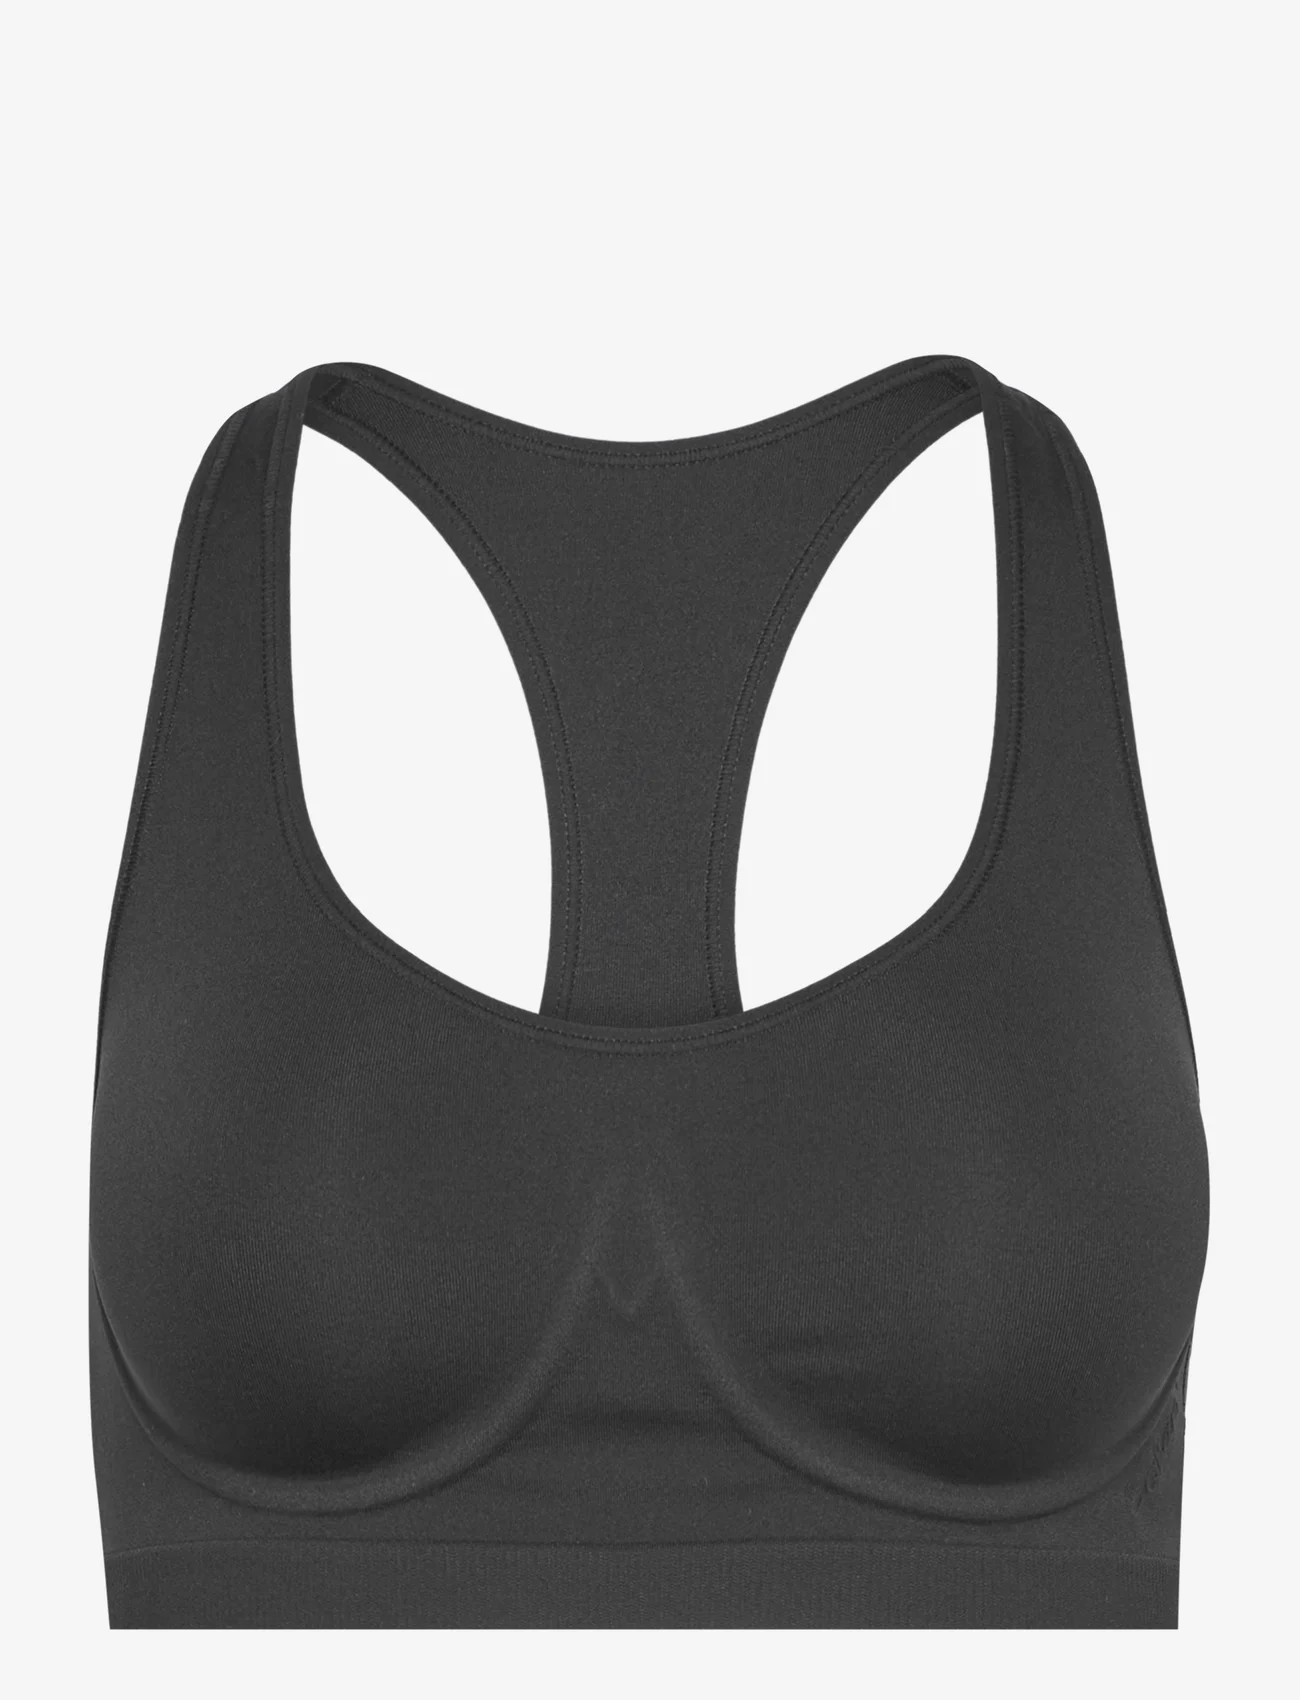 Calvin Klein - UNLINED BRALETTE - tank top bras - black - 0